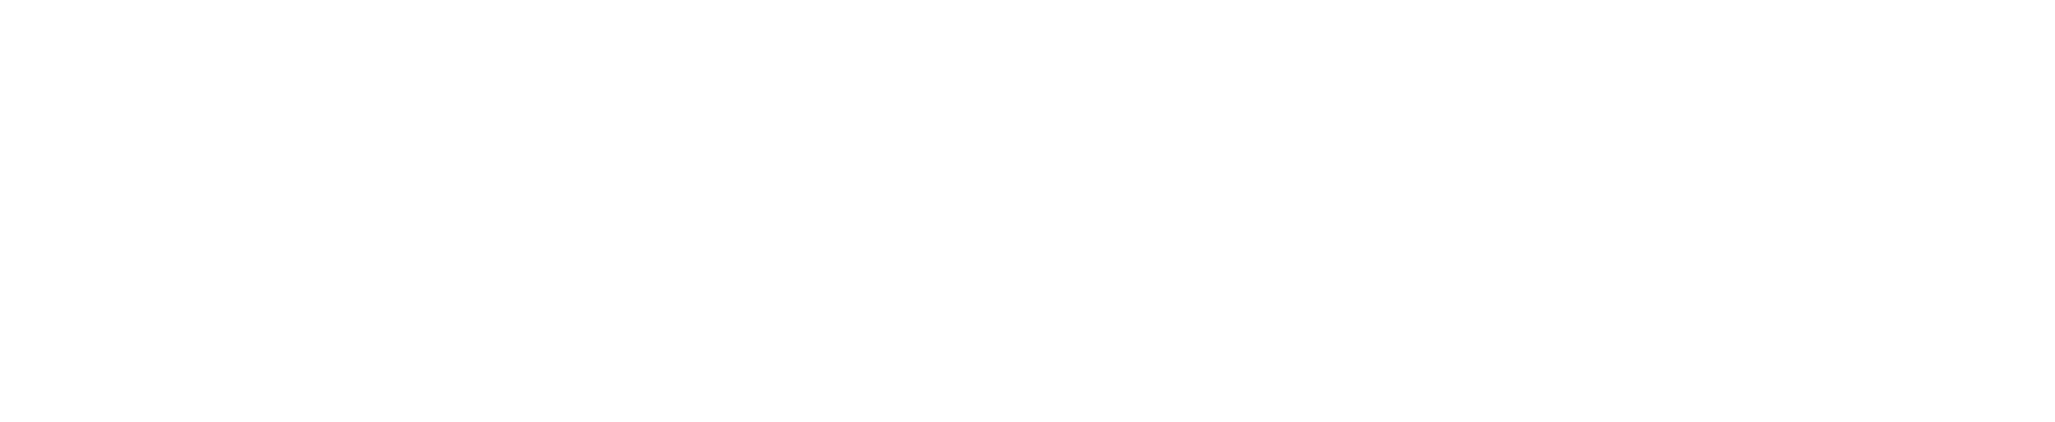 Gordon Web Solutions